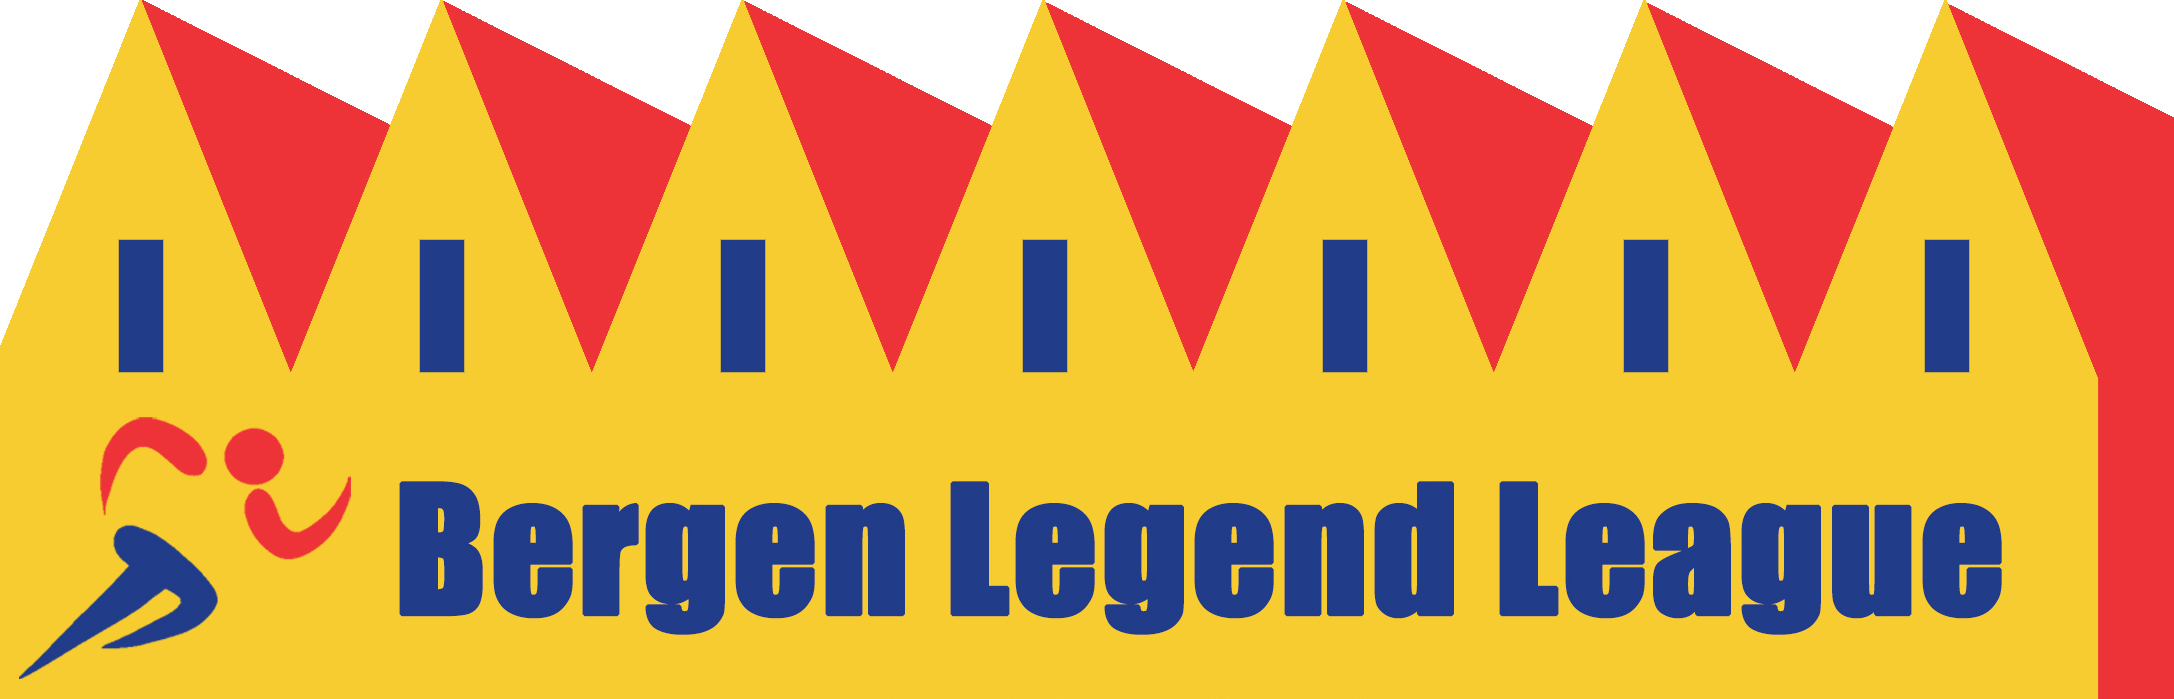 Bergen Legend League logo ver 3.1 white.jpg